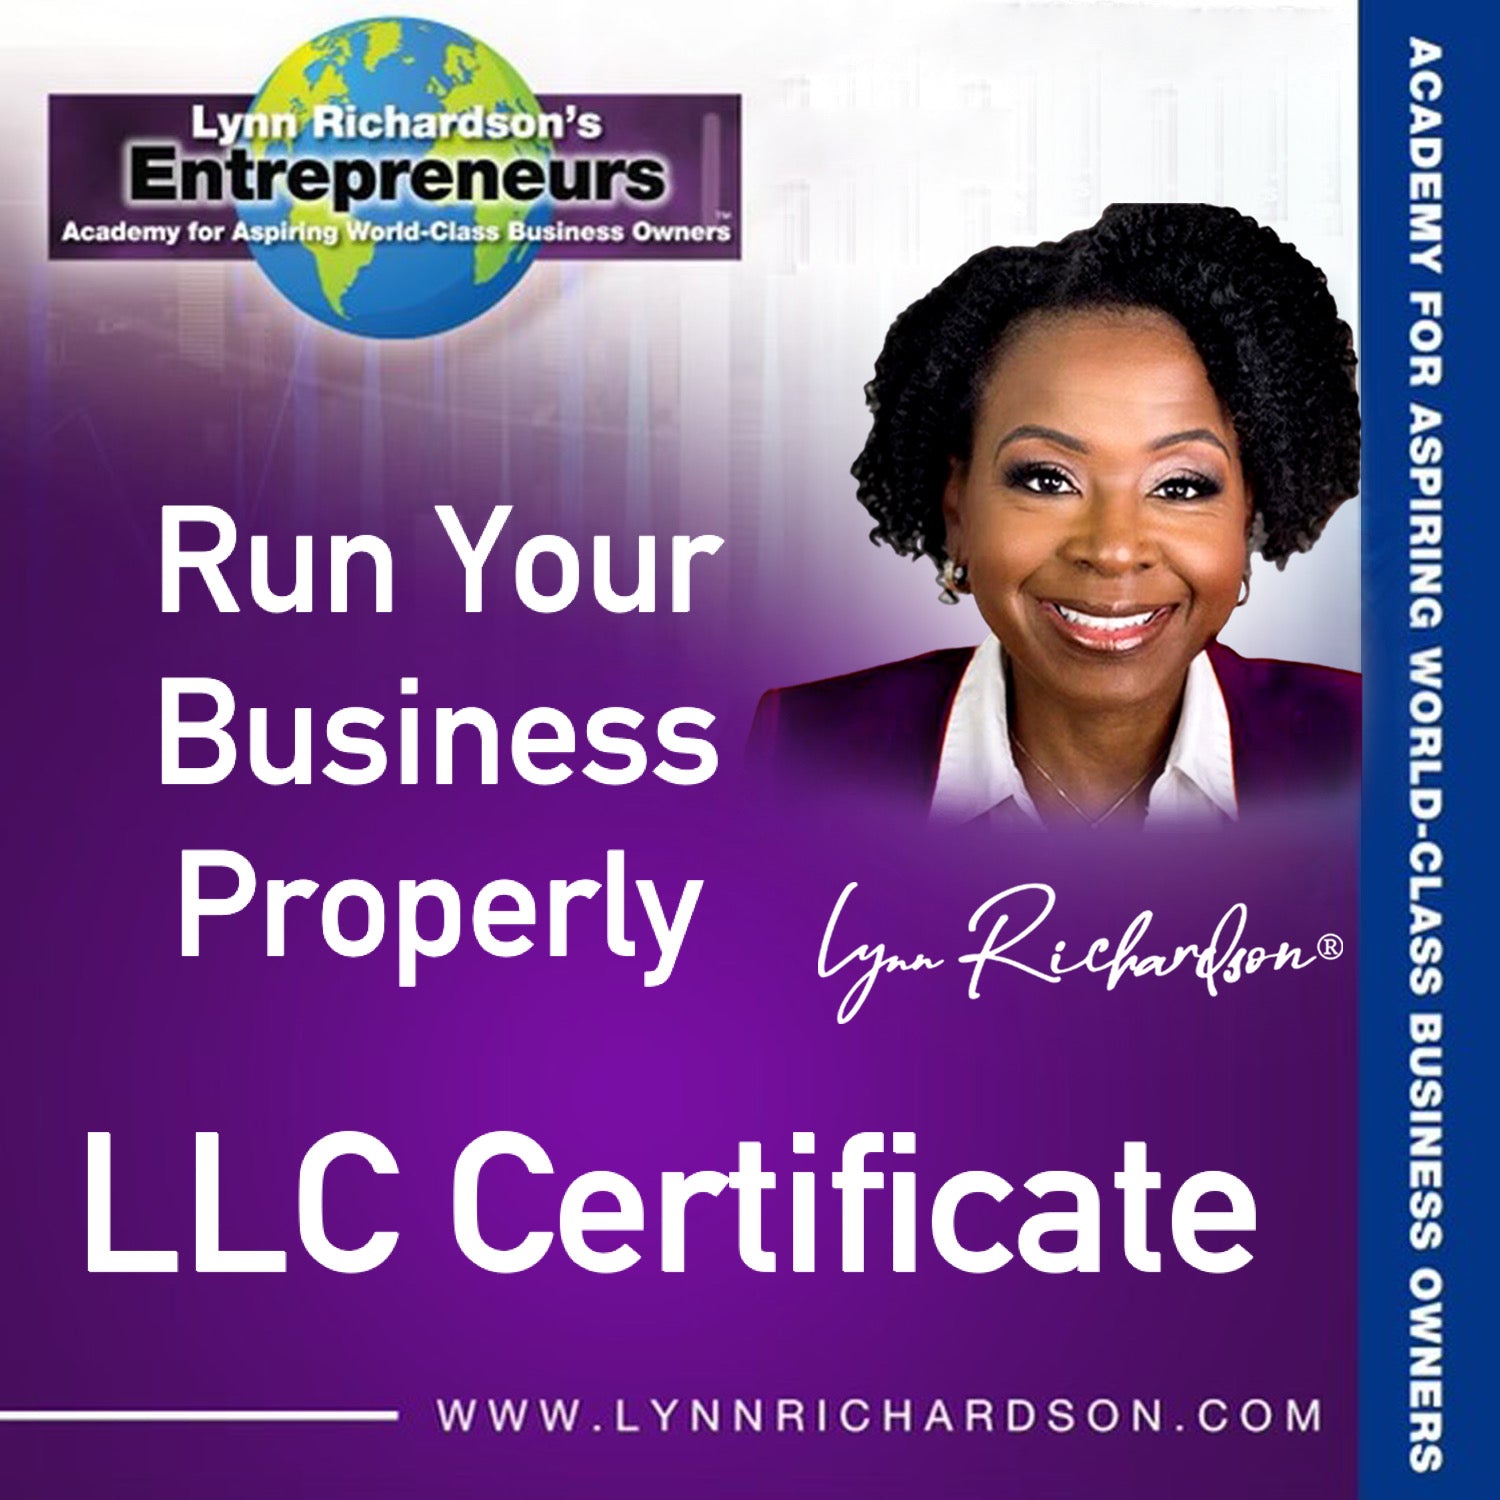 LLC Certificate for Sole Proprietors